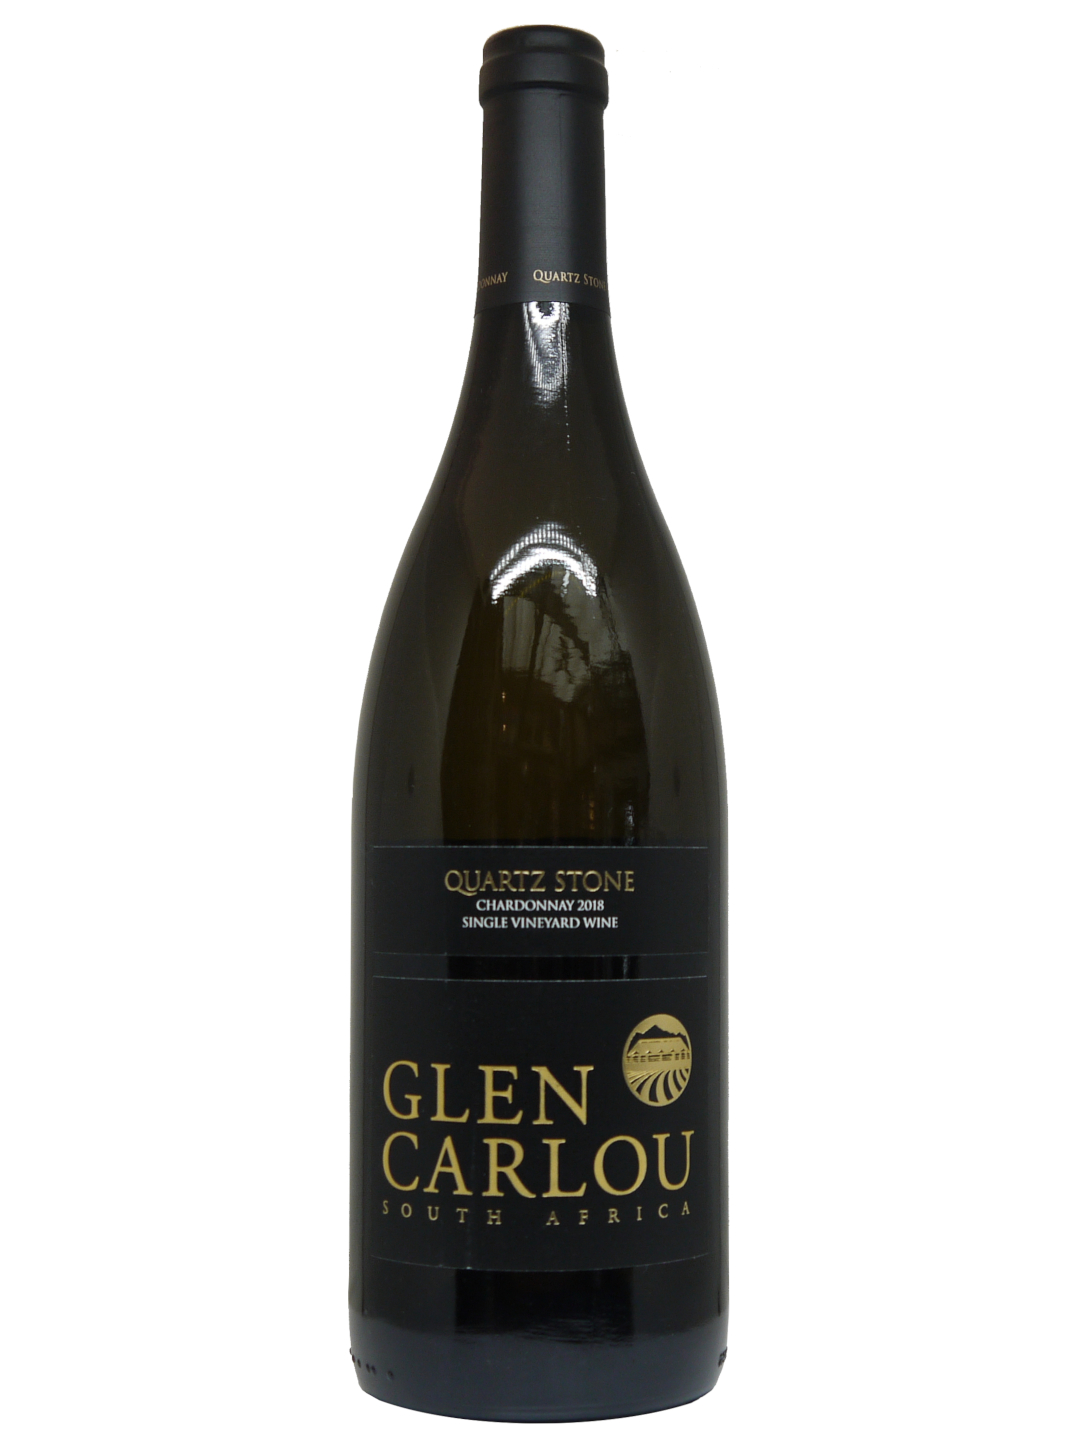 Glen Carlou Chardonnay Quarz